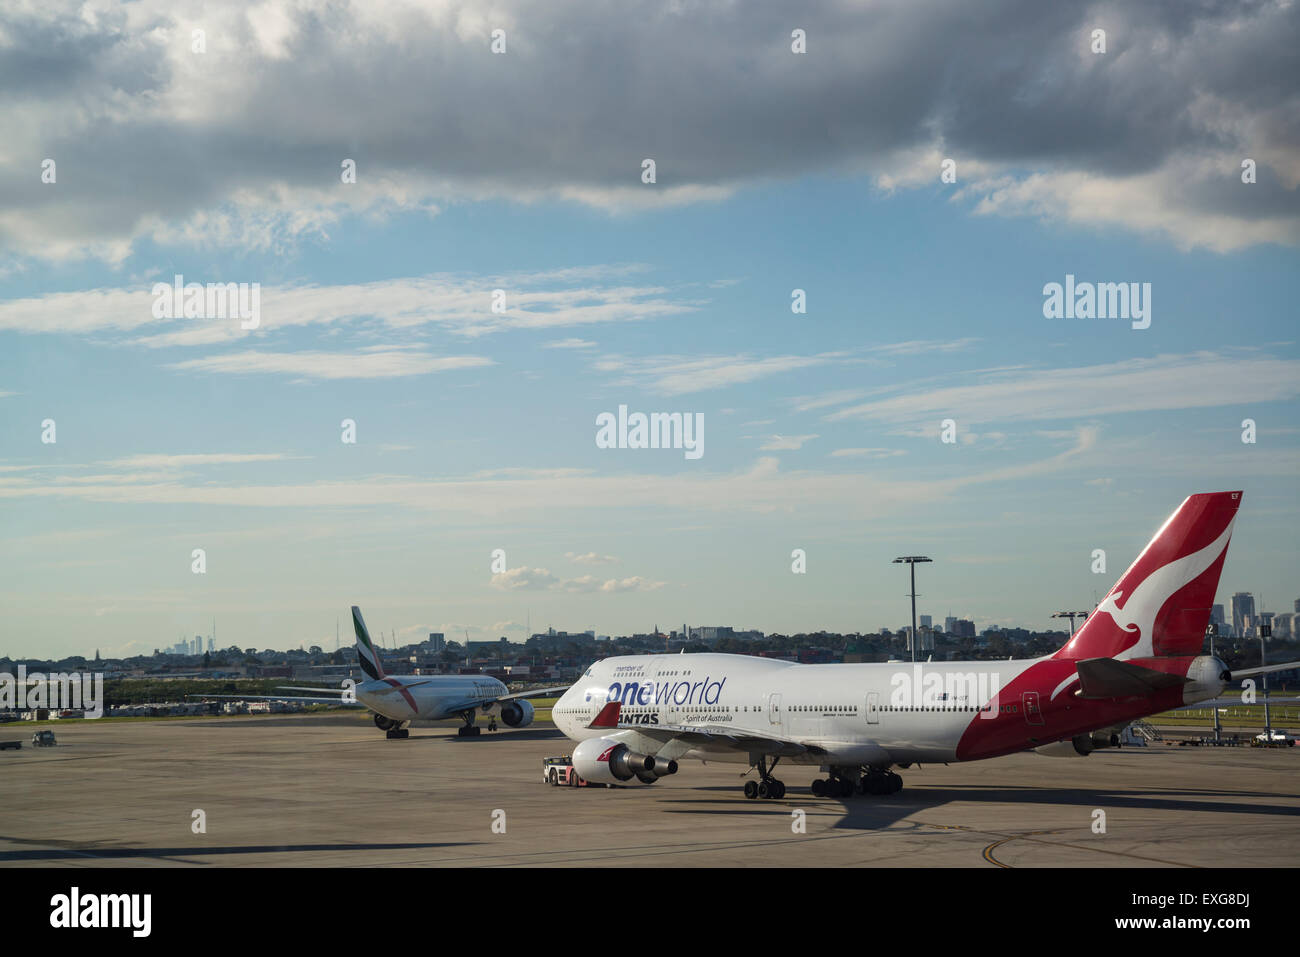 Sydney airport, Qantas one world aircraft, Australia Stock Photo